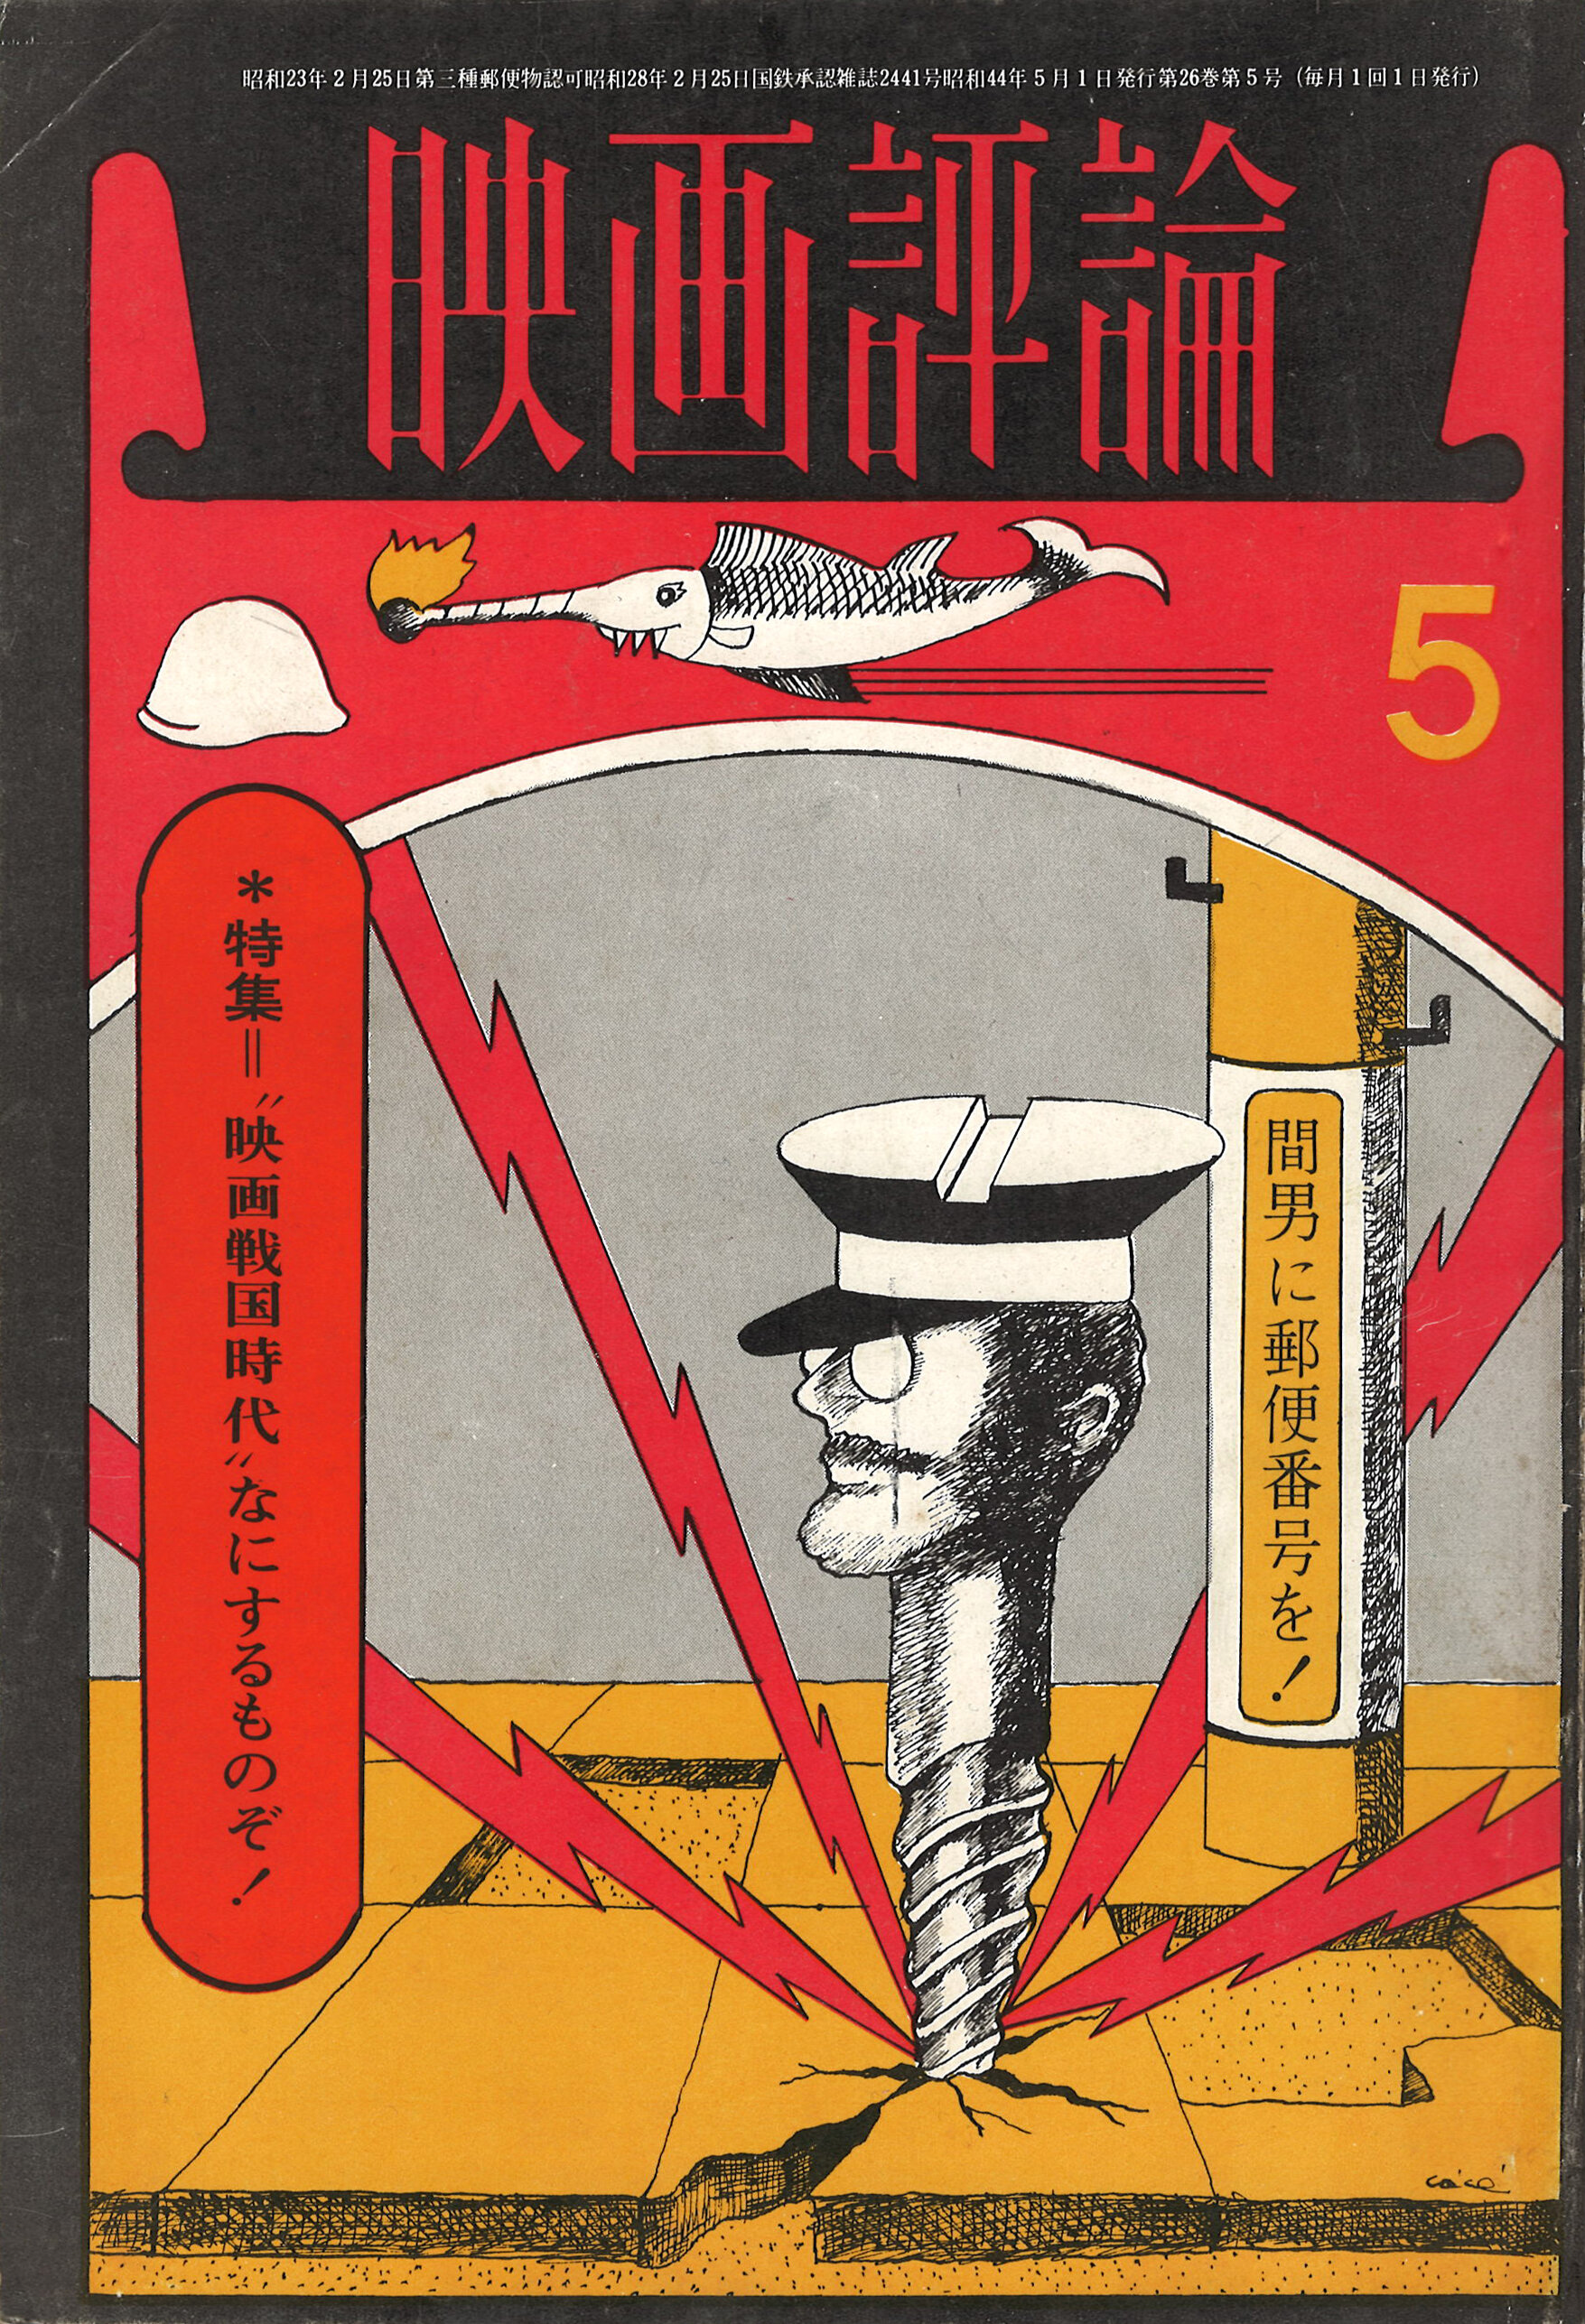  [fig. 11] “First Masnifesto of Expo Destruction Action” in  Eiga Hyōron  (Cinema criticism). May 1969. Collection of Zero Jigen Katō Yoshihiro Archive 